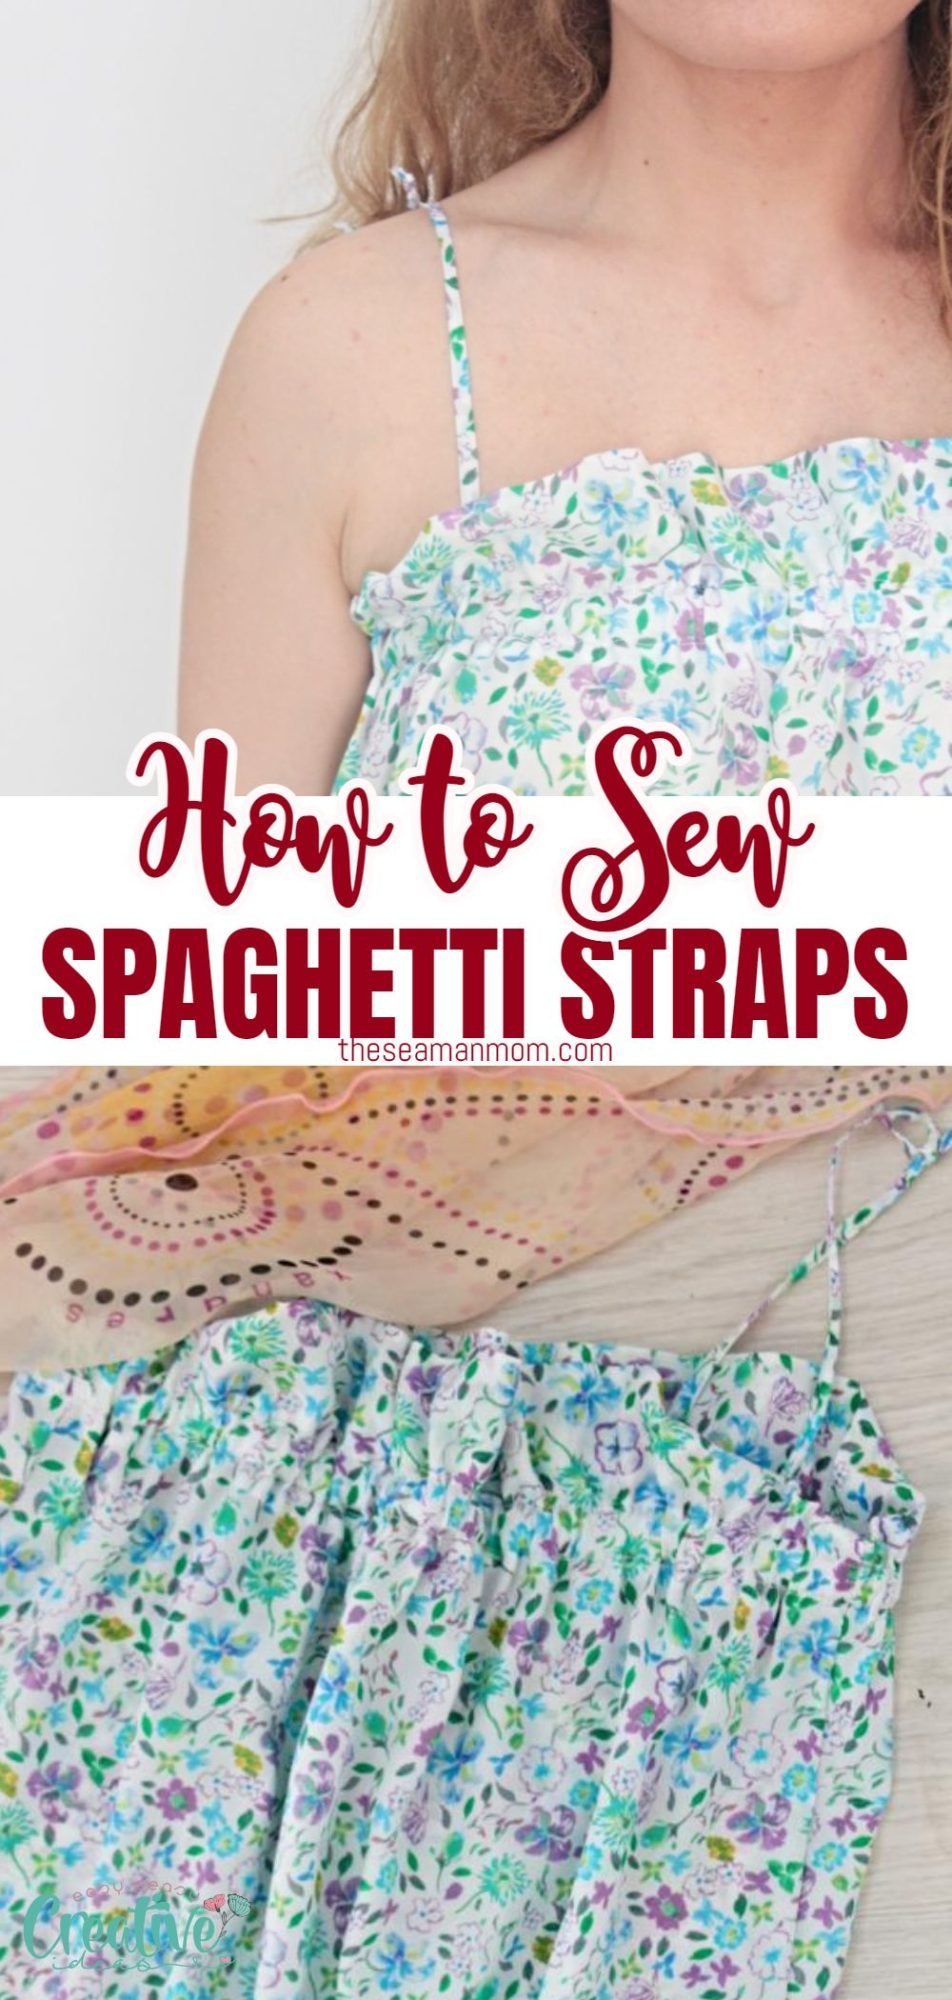 Photo collage of handmade spaghetti straps